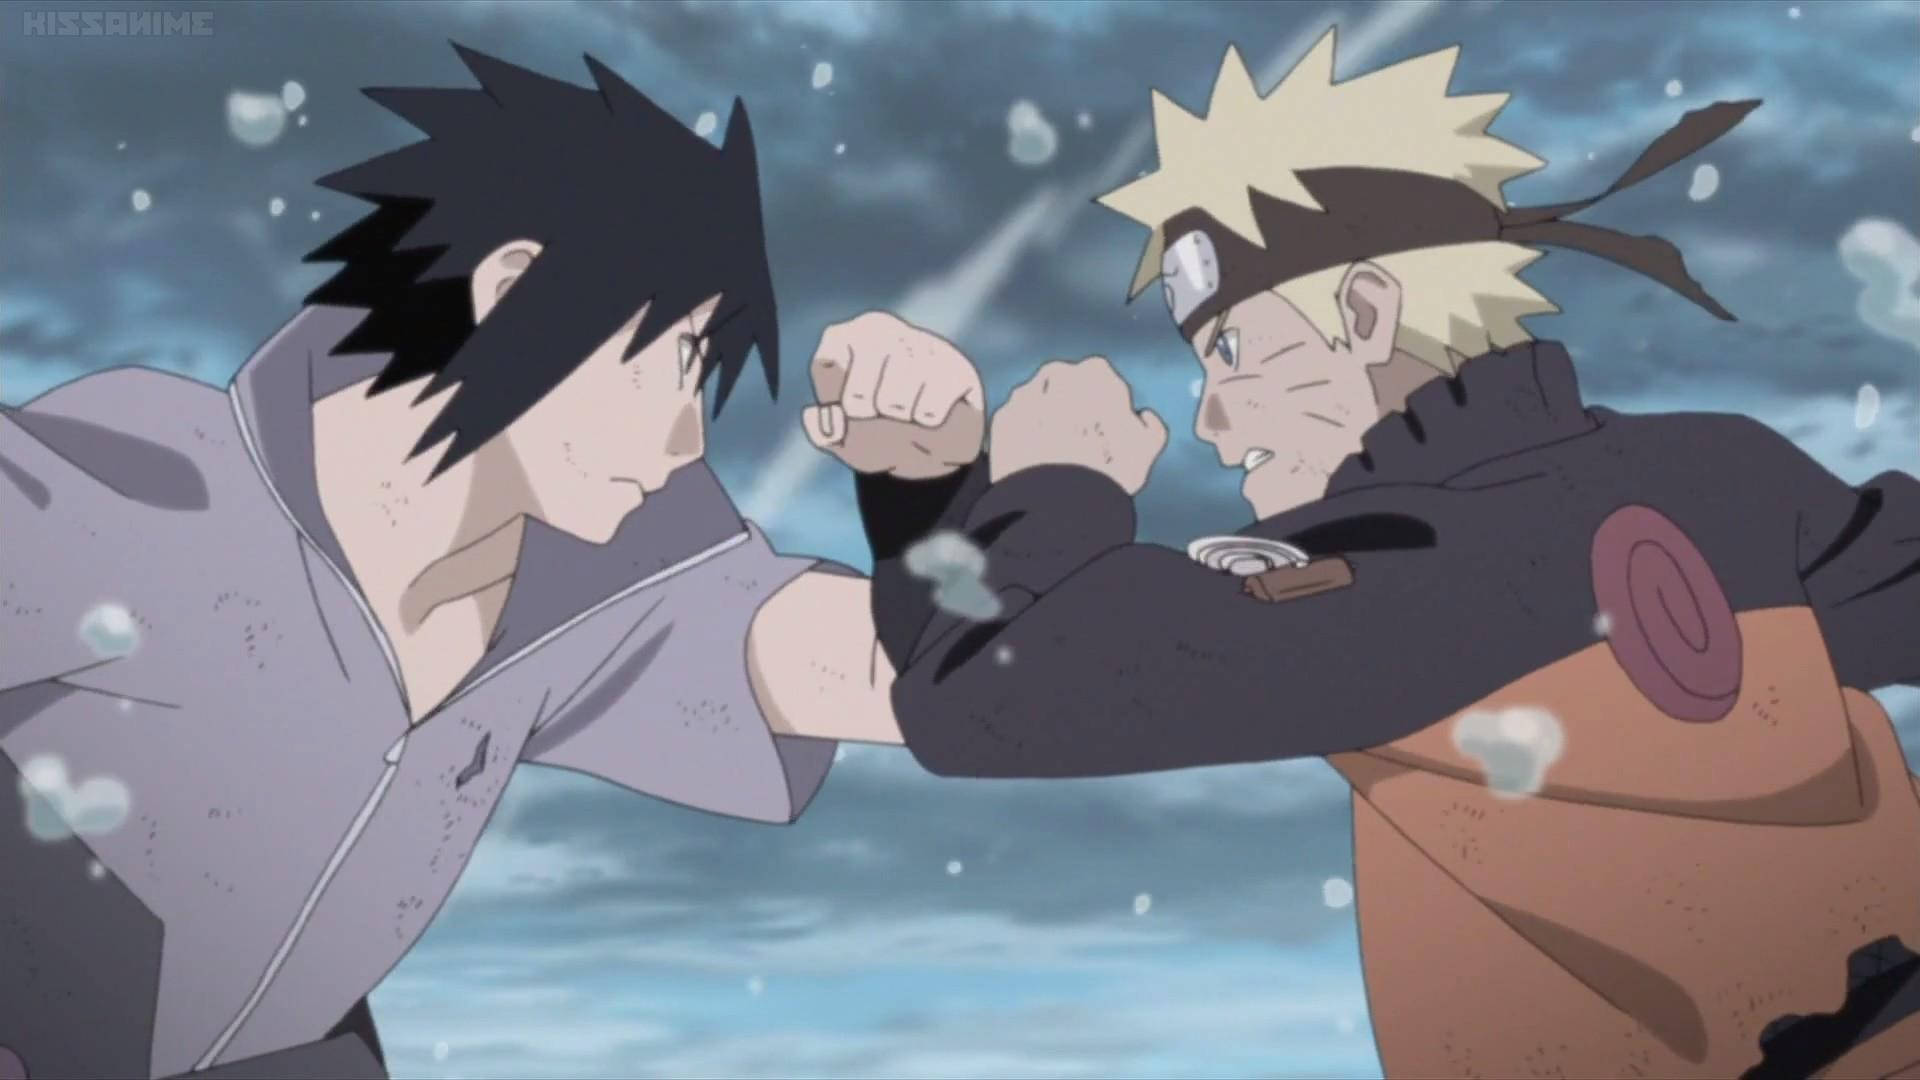 Aesthetic Sasuke Fight With Naruto